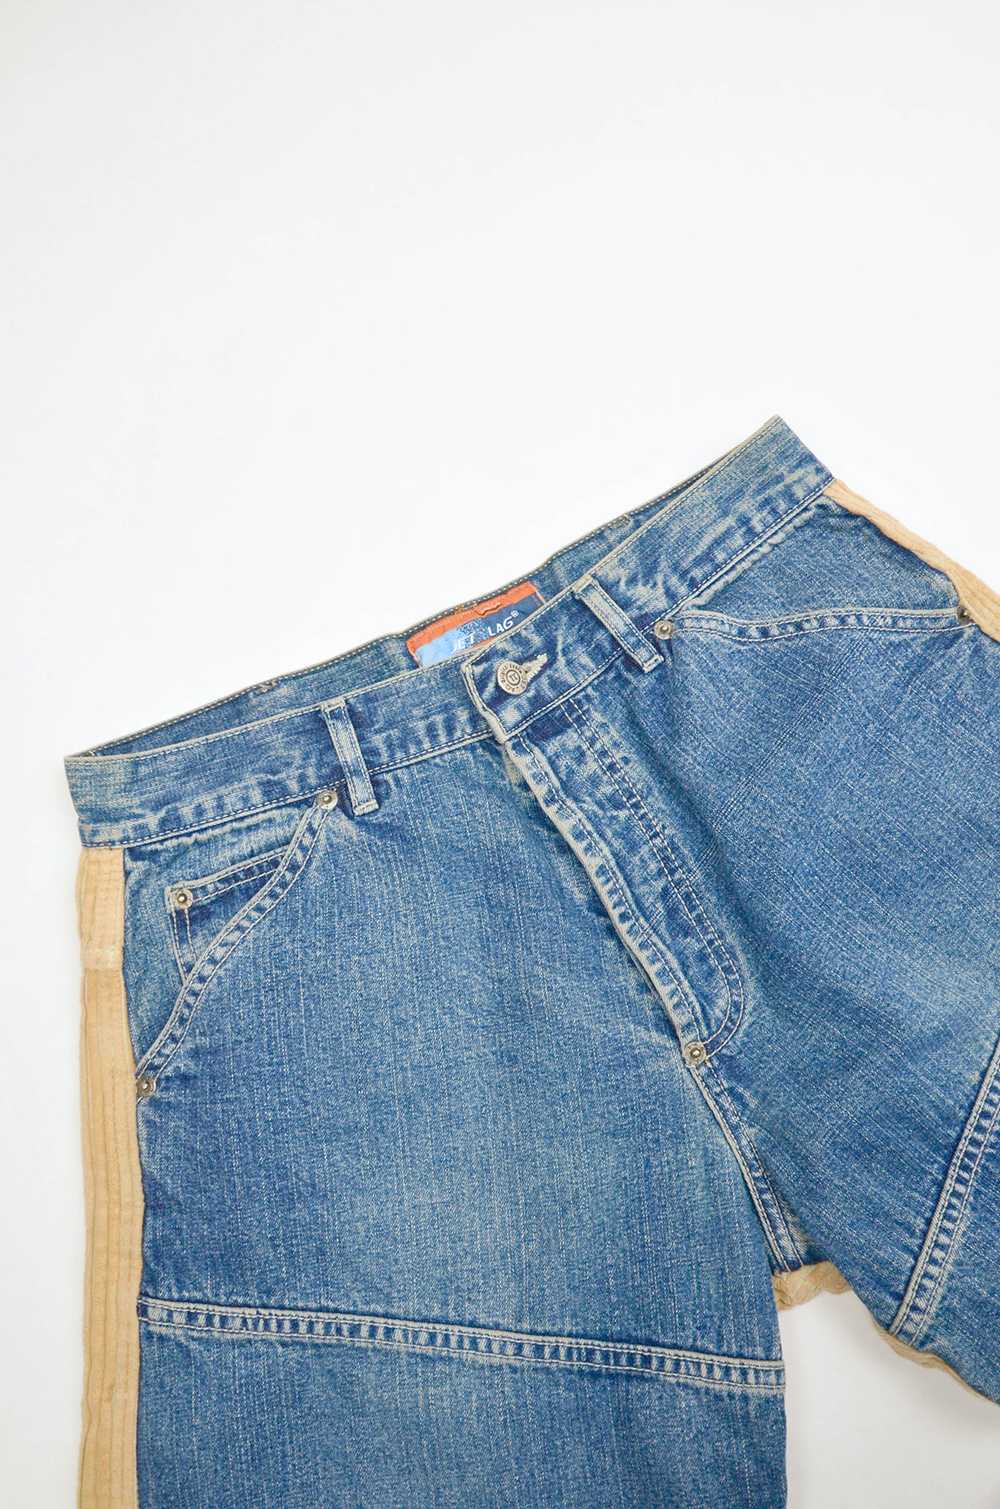 Jet Lag JET LAG Vintage Half Corduroy Jeans - image 3